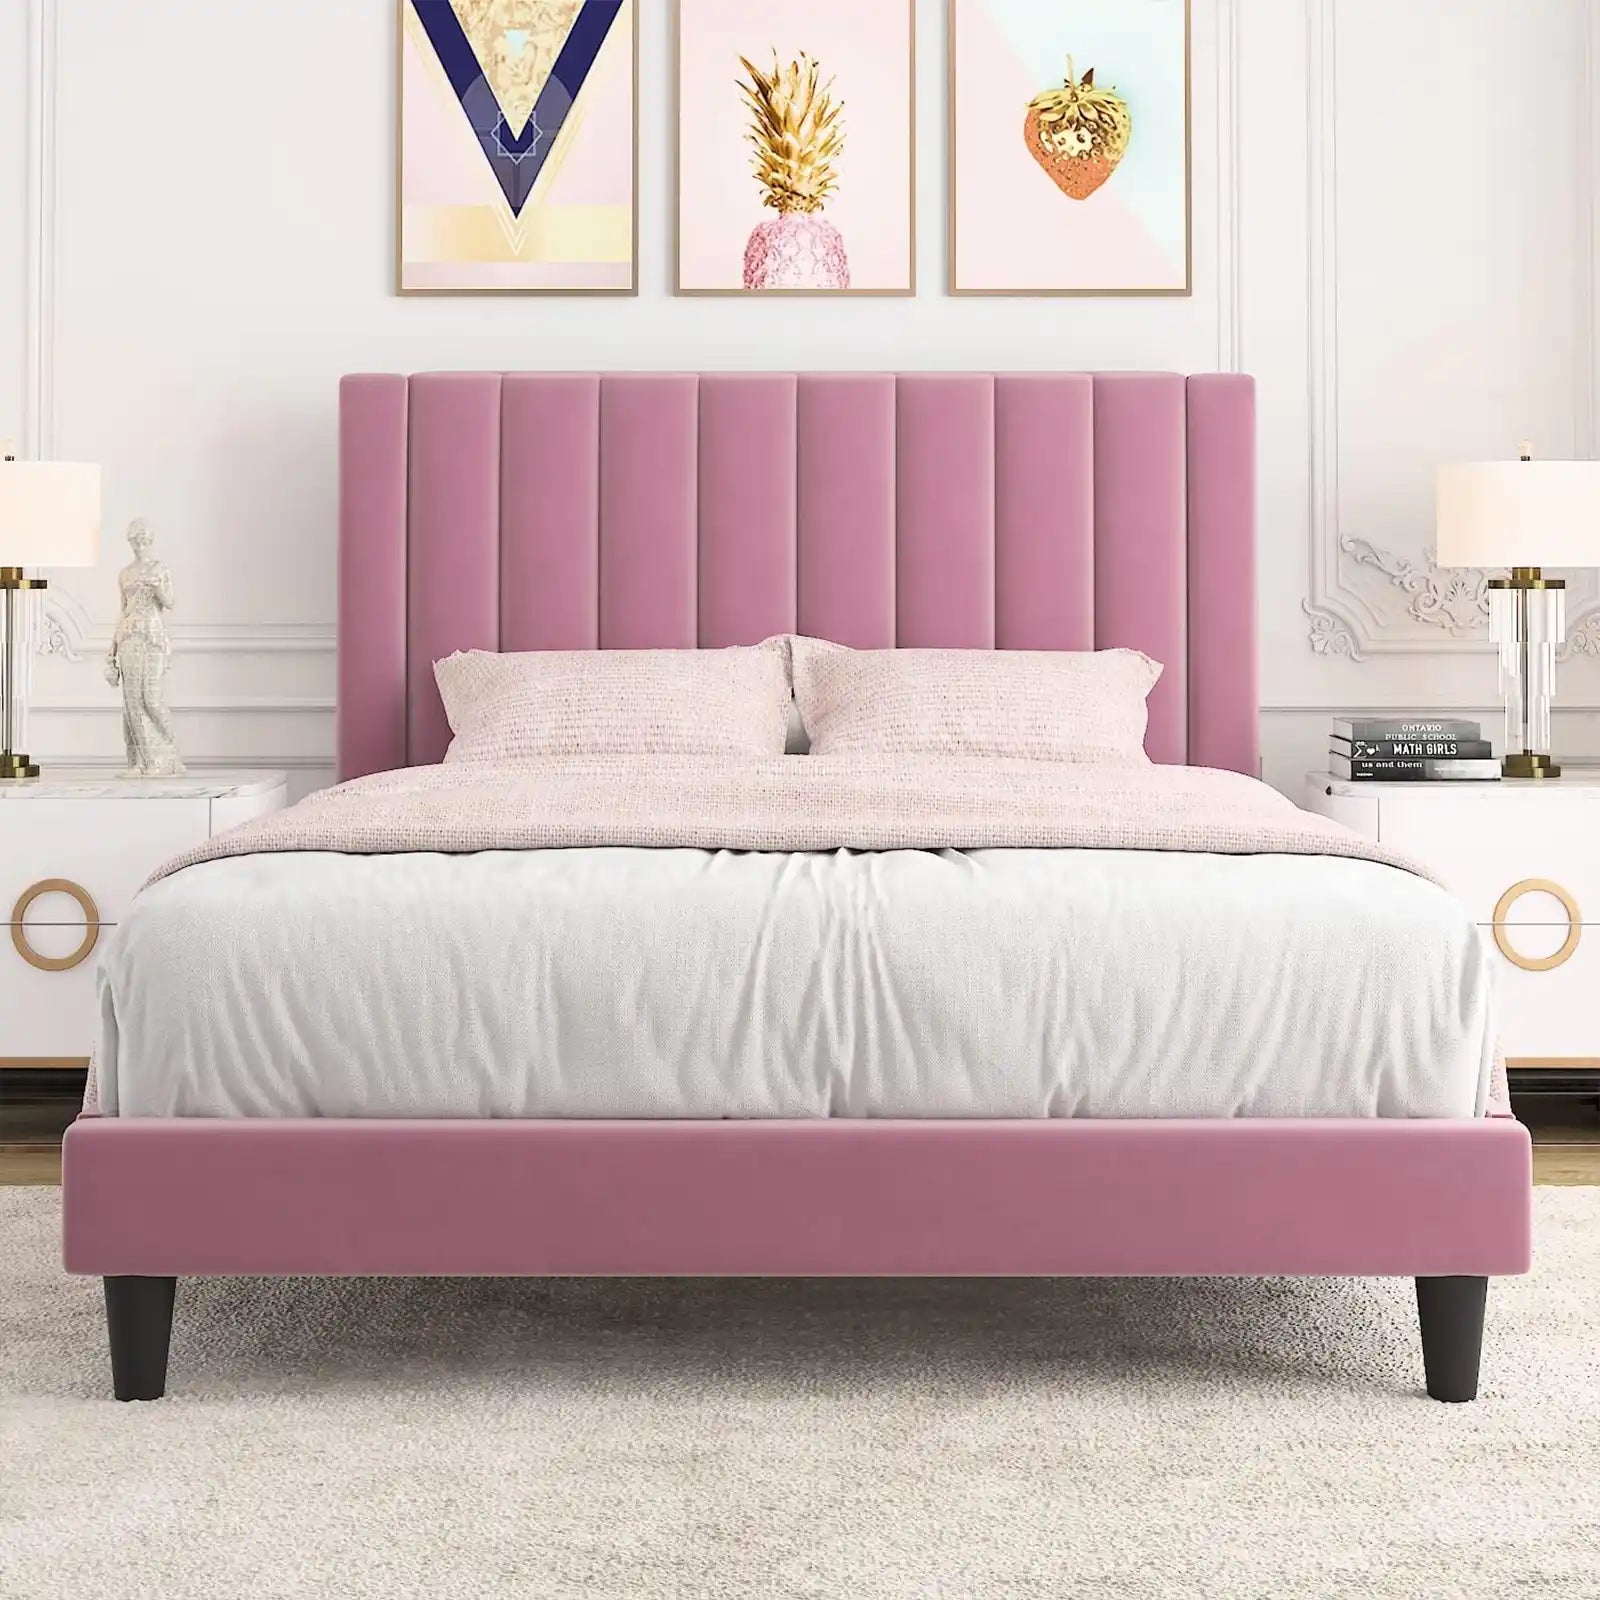 Velvet Upholstered Bed Frame with Vertical Channel Tufted Headboard